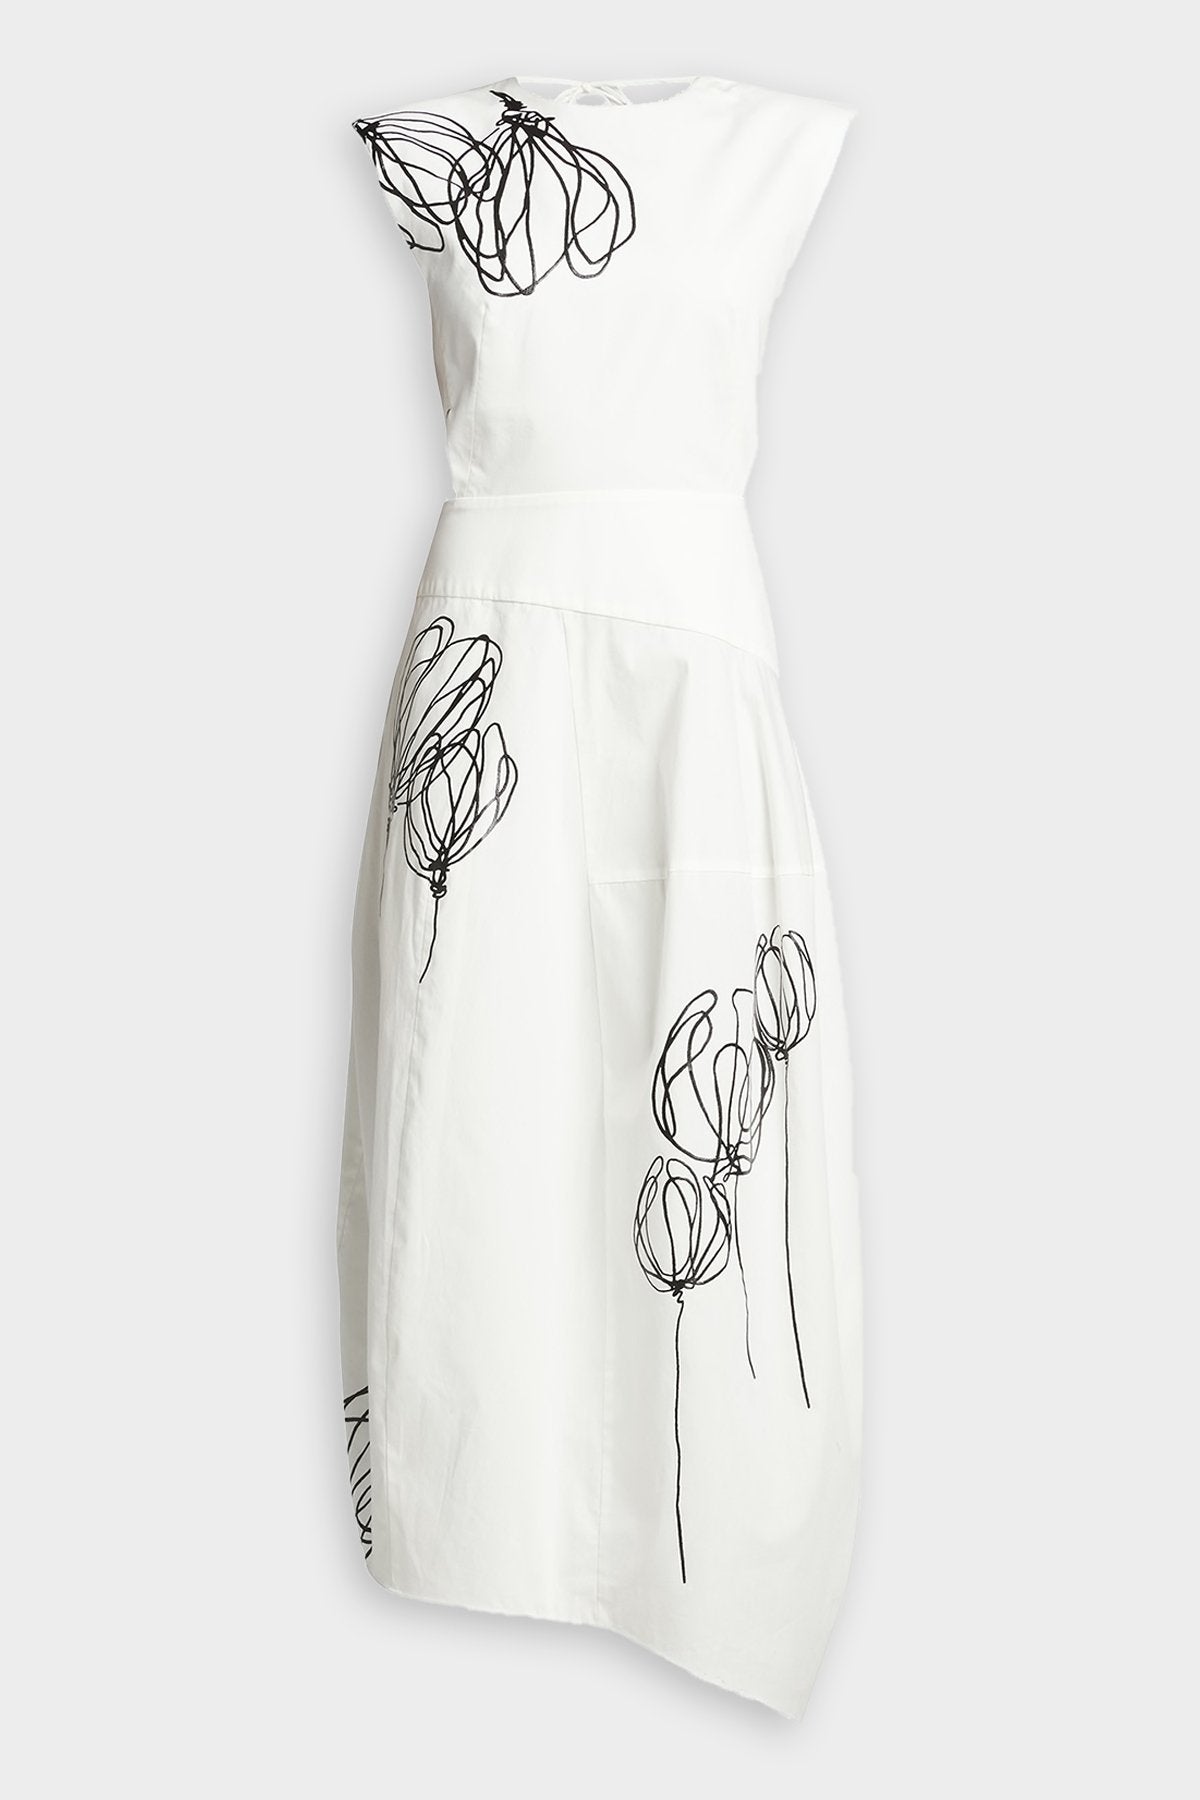 Tulipe Dress in White/Black Multi - shop-olivia.com